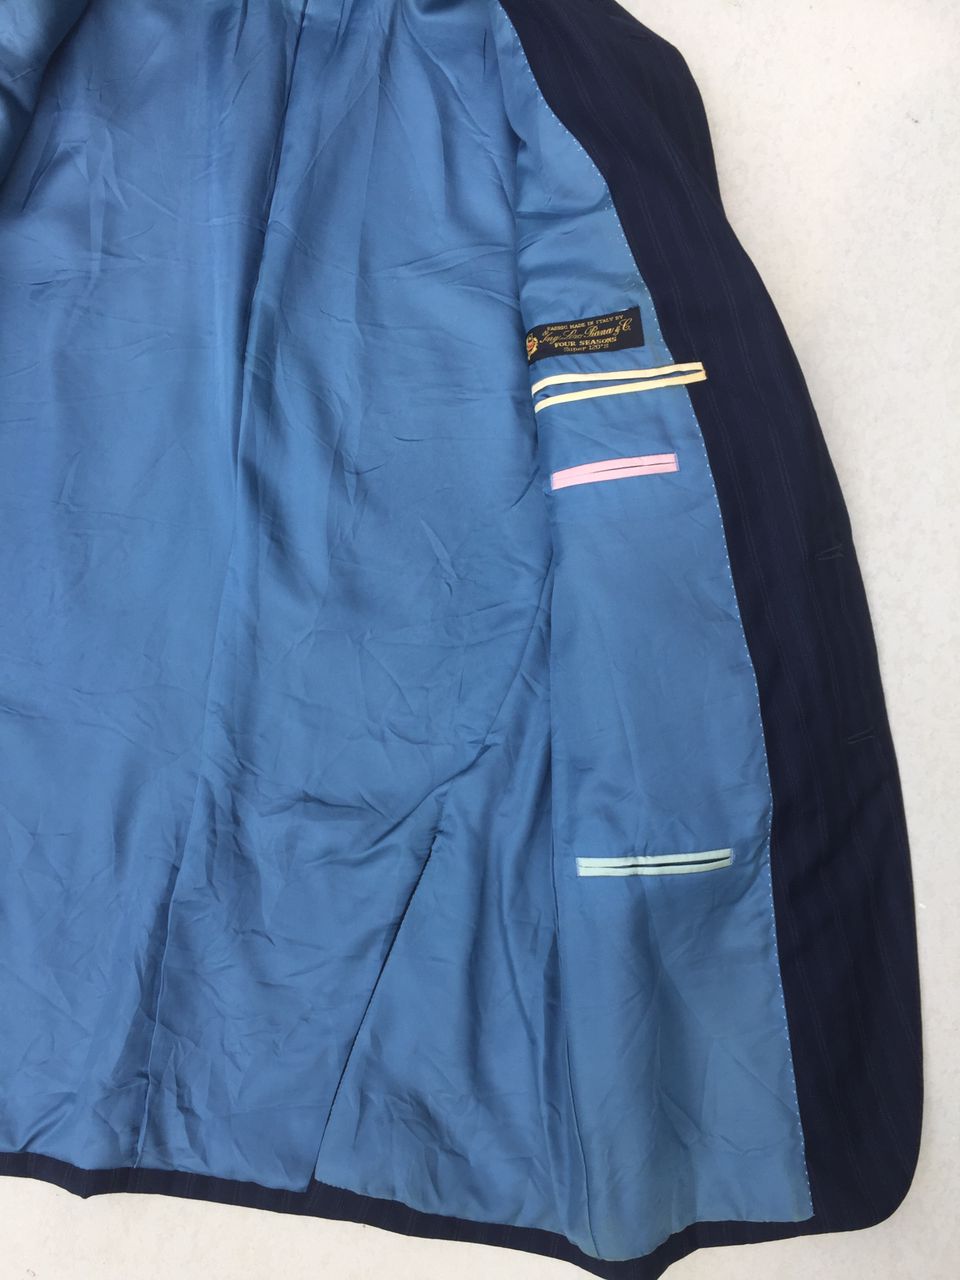 Paul Smith Loro Piana Blazer Suit stripe navy - 11